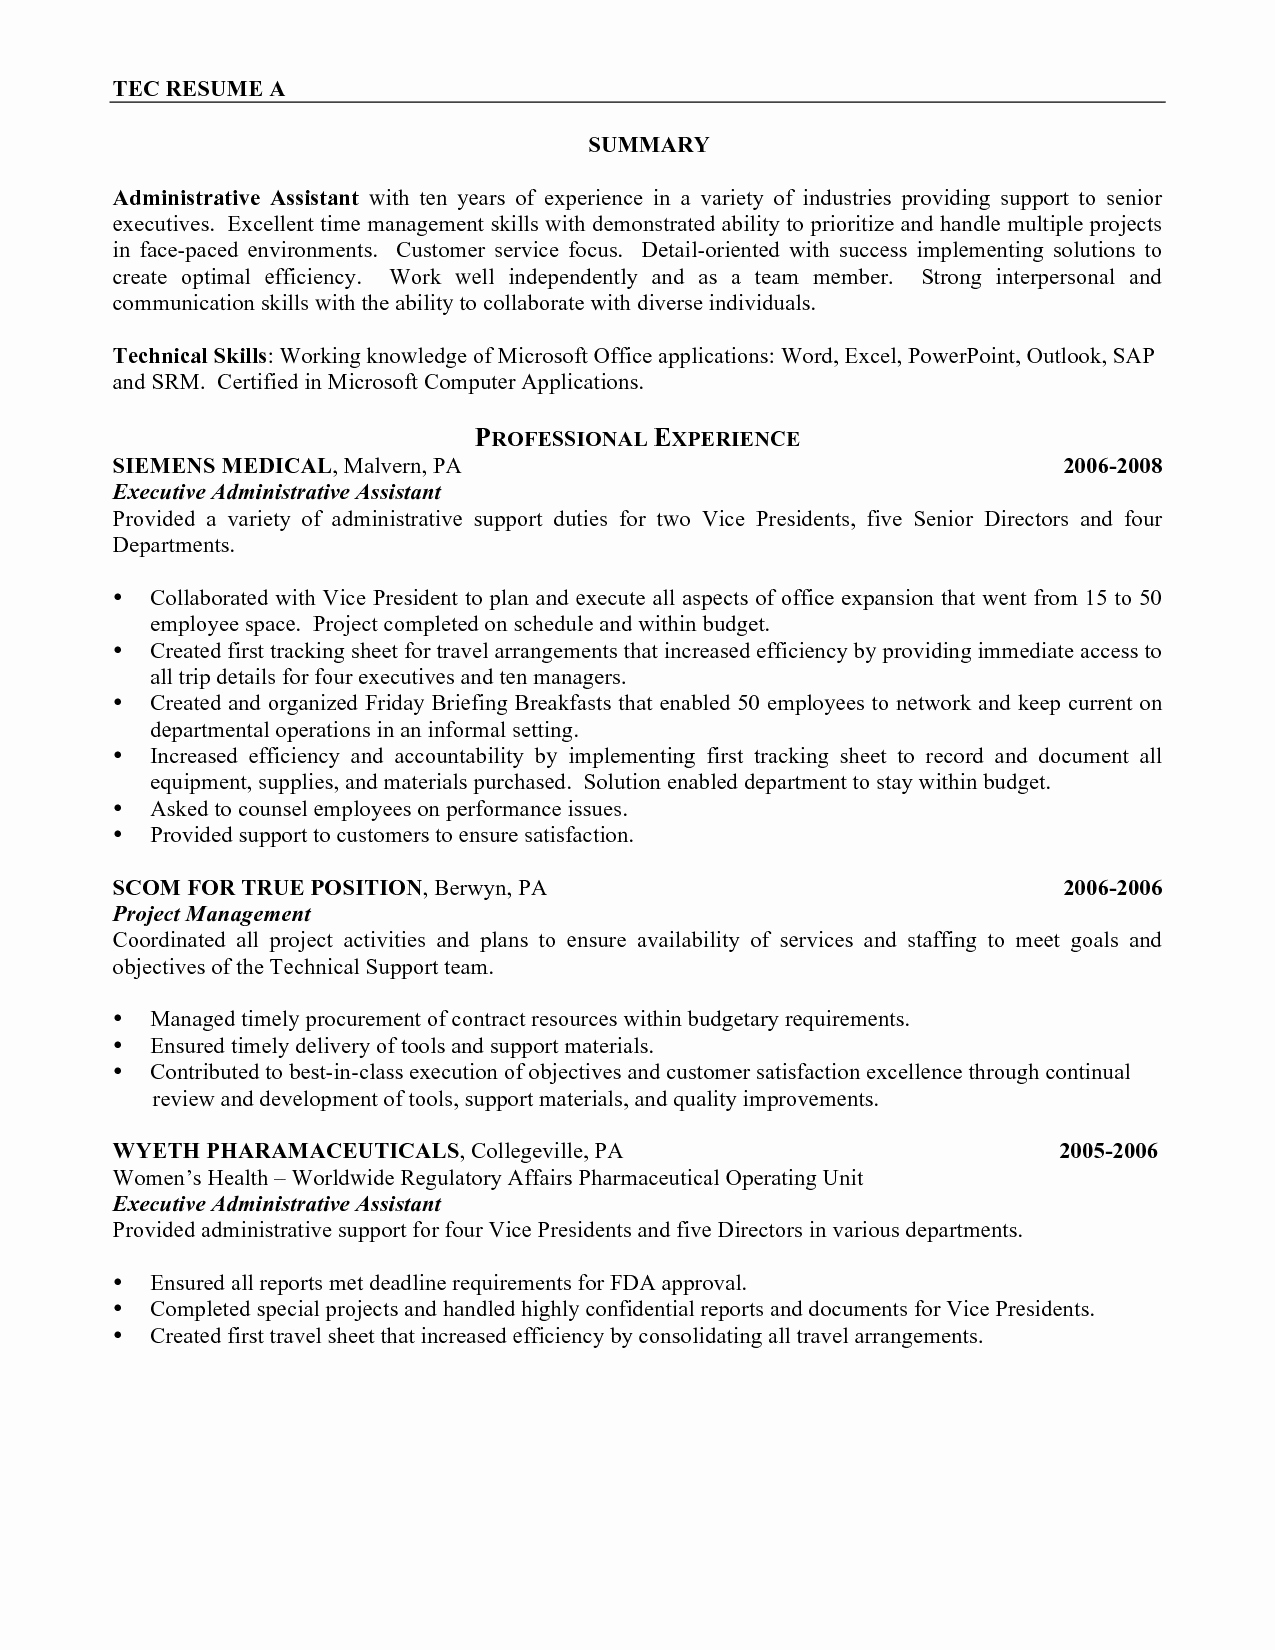 resume template admin assistant fresh best admin resume sample new